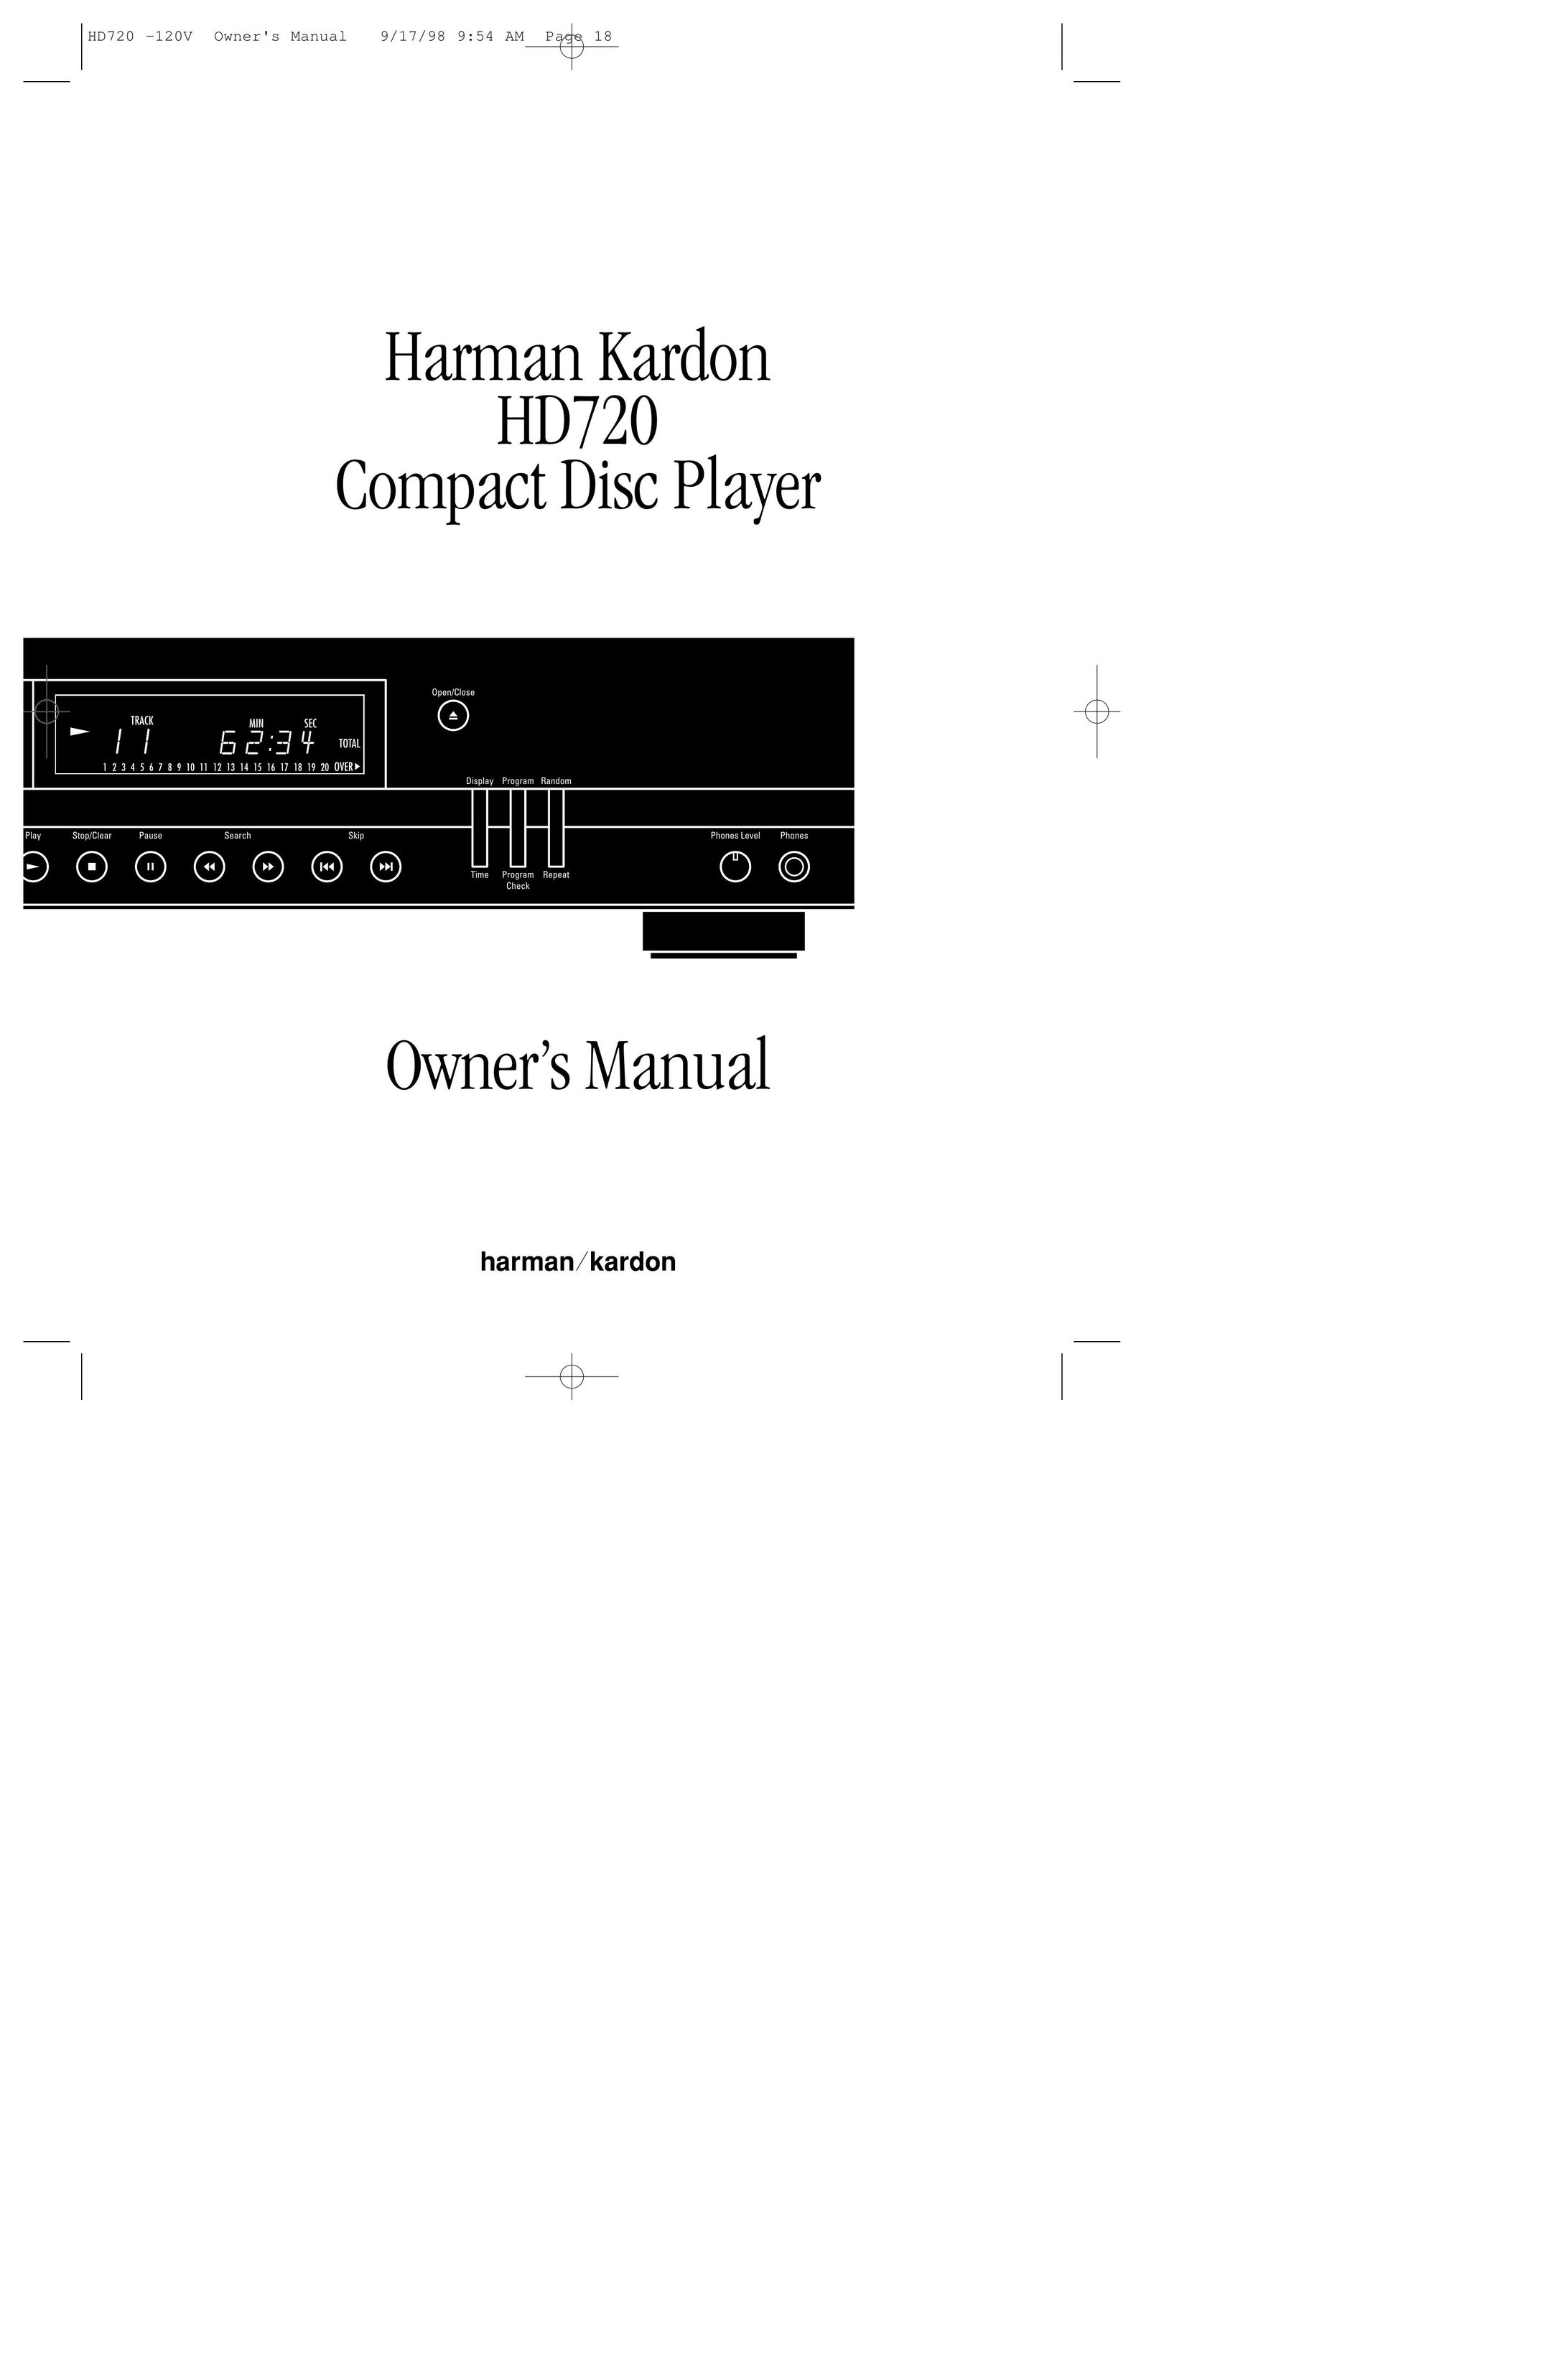 Harman-Kardon HD720 CD Player User Manual (Page 1)